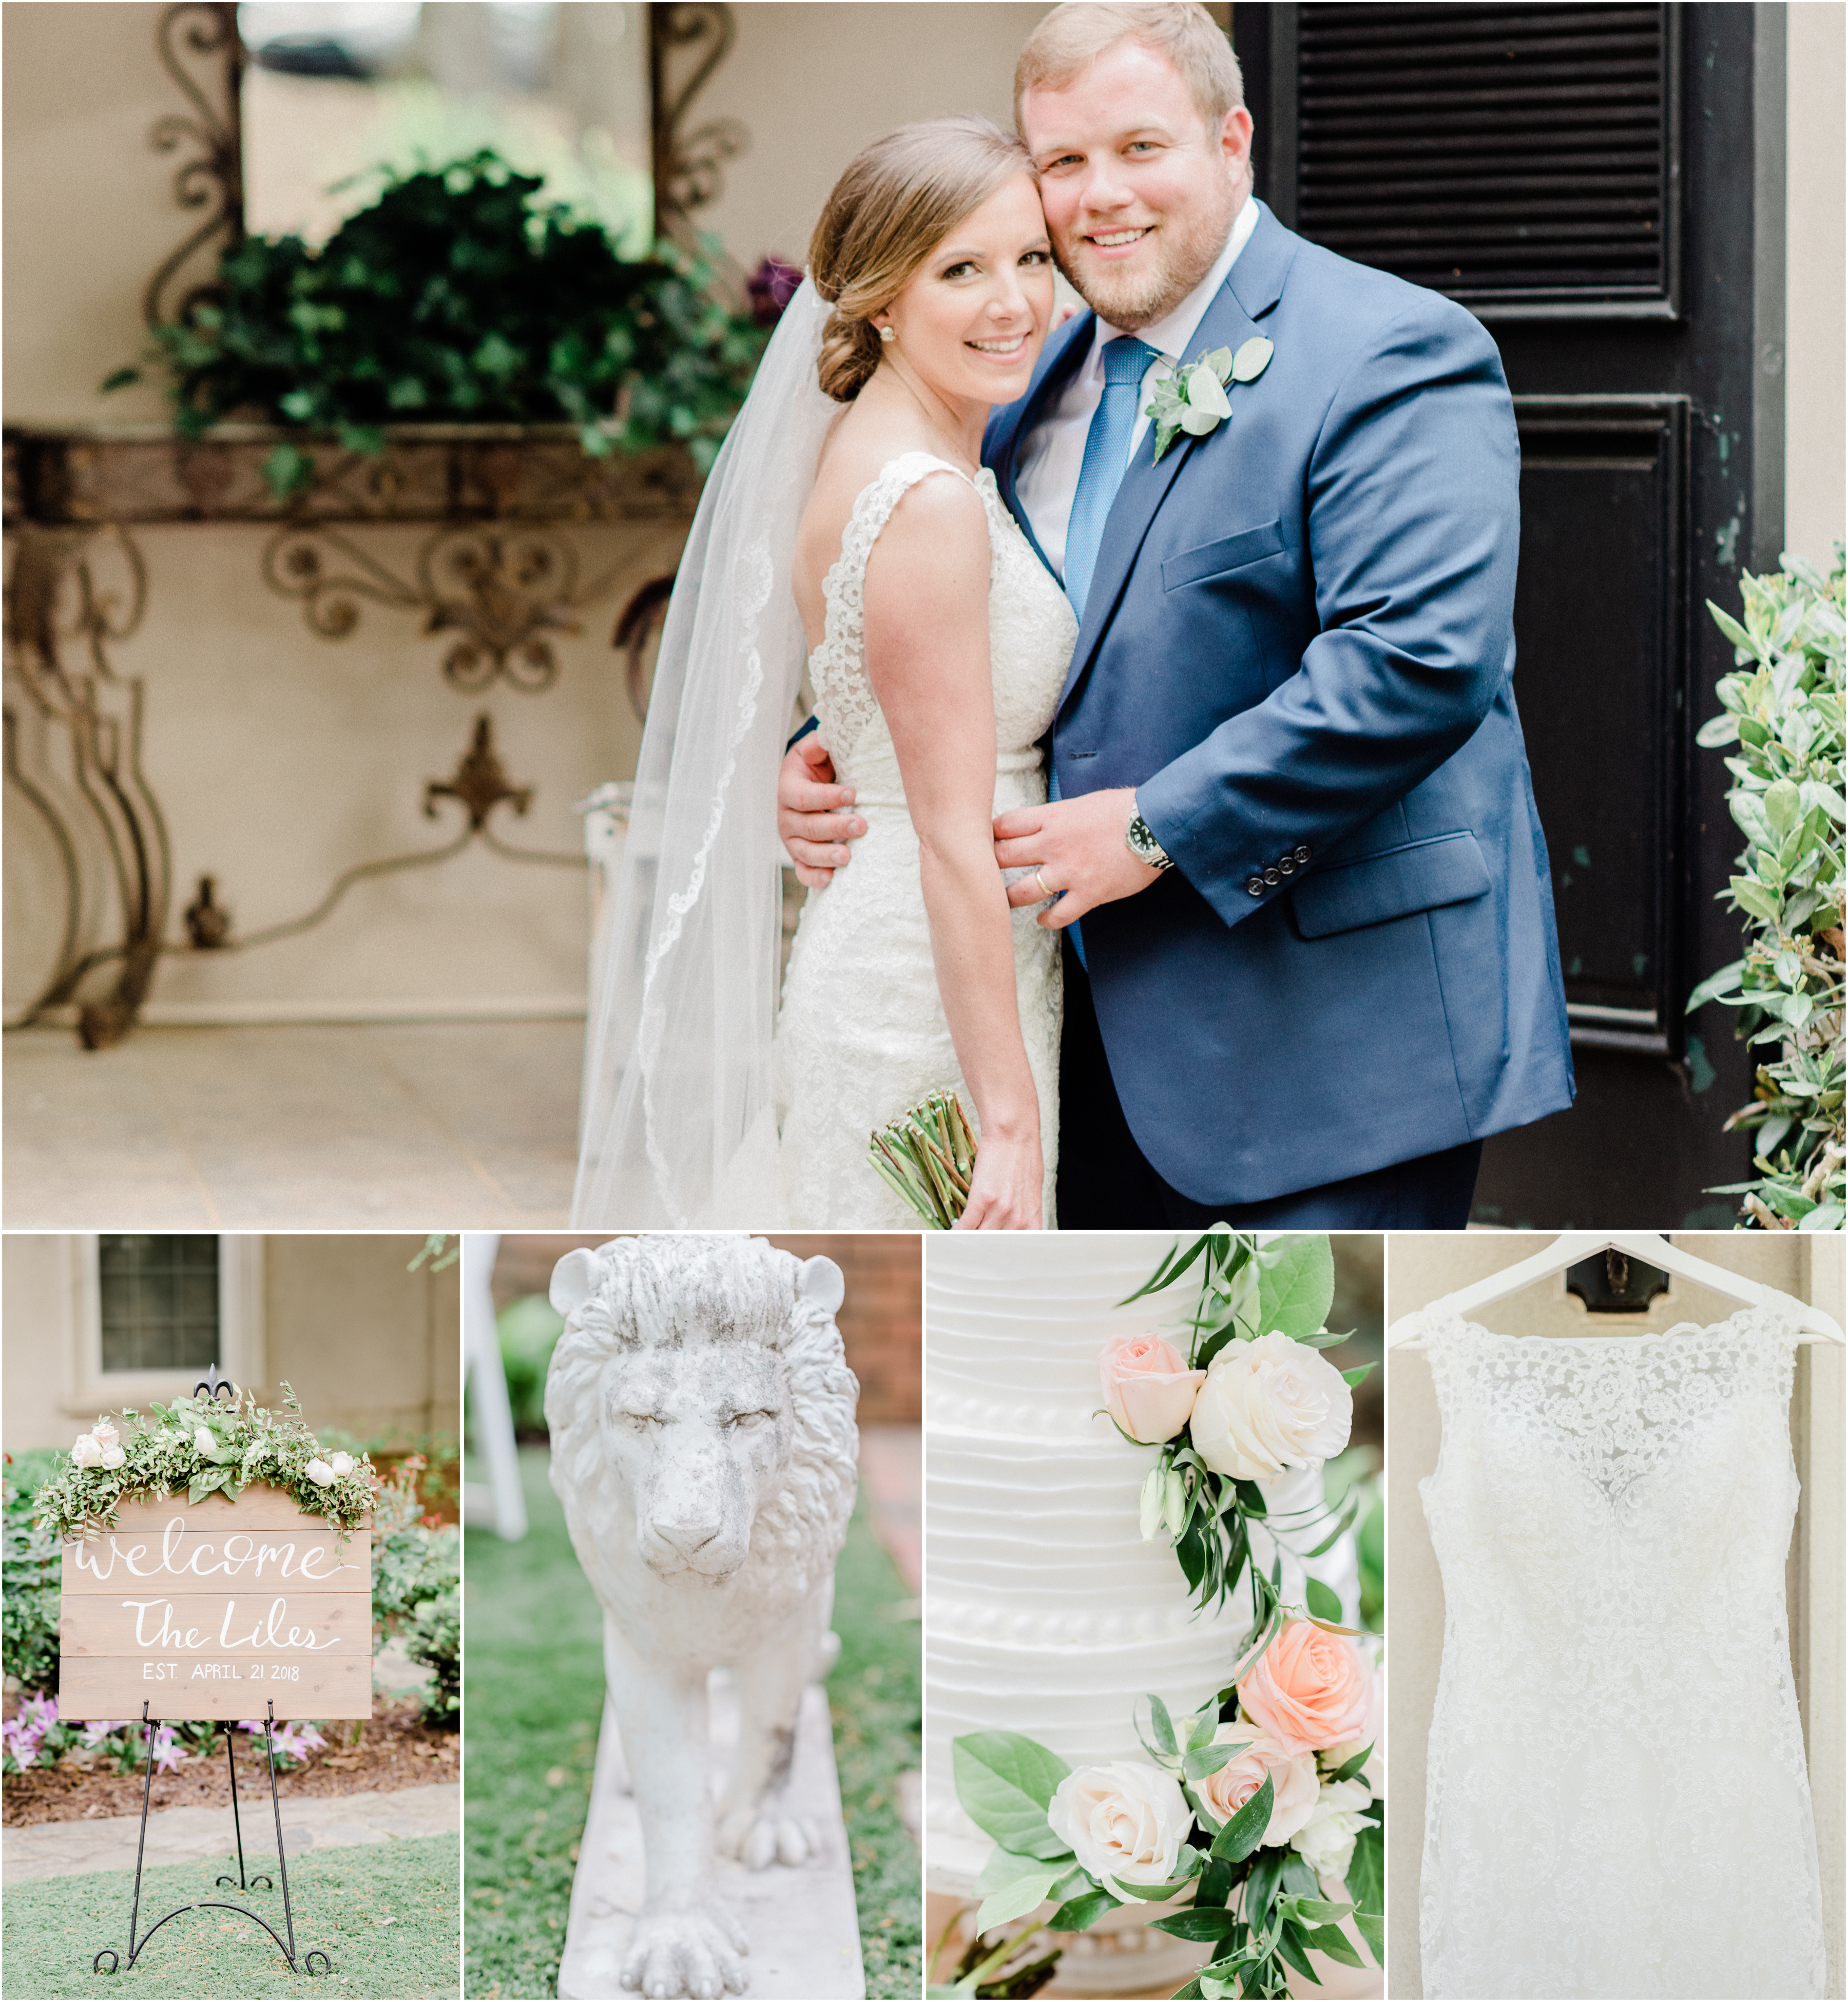 Lions Gate Manor Wedding in Spartanburg, South Carolina